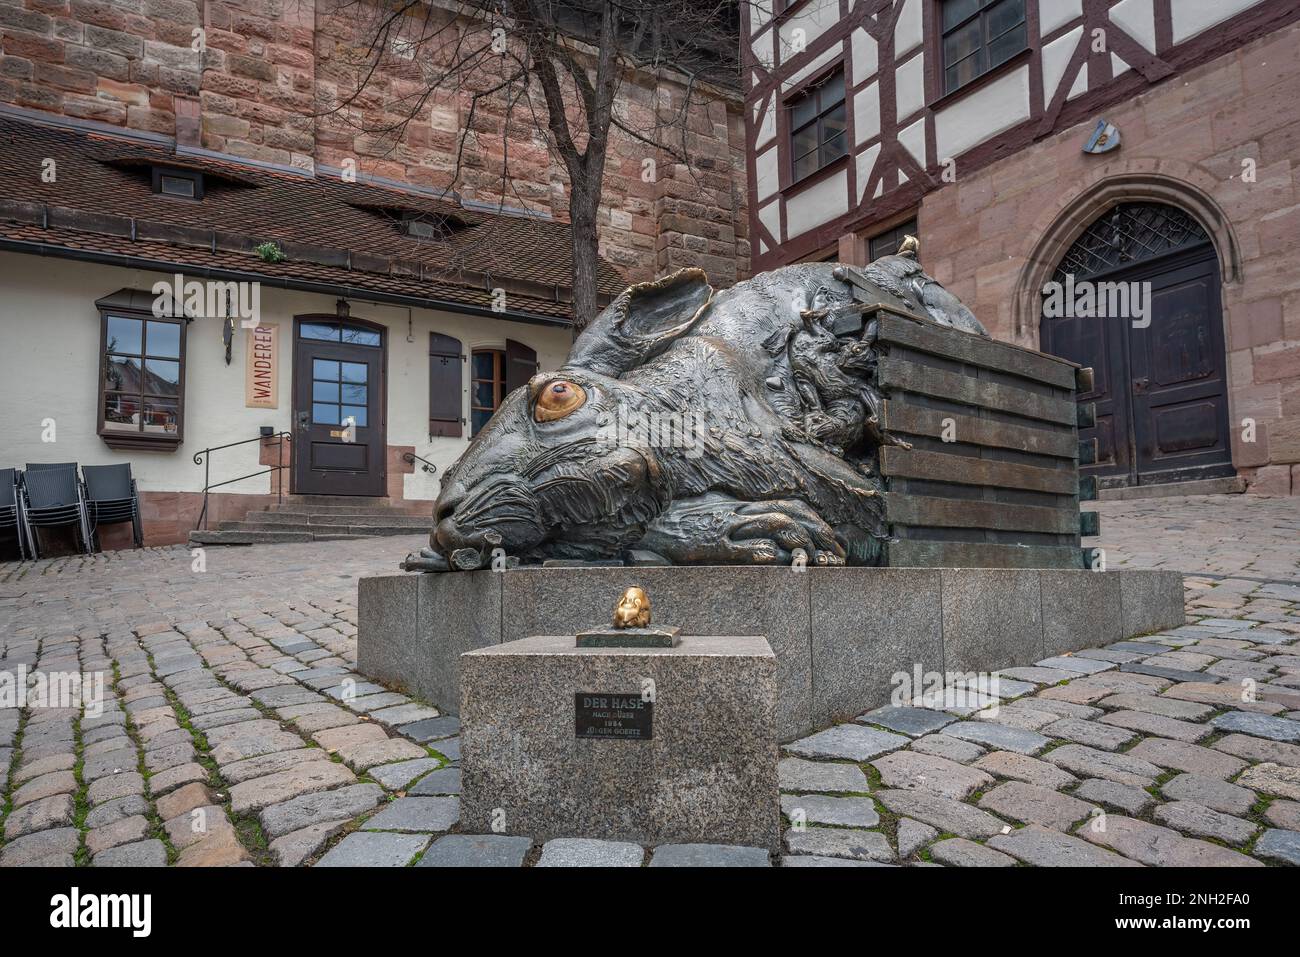 Rabbit Sculpture (Der Hase) based on Albrecht Durer work - Nuremberg, Bavaria, Germany Stock Photo